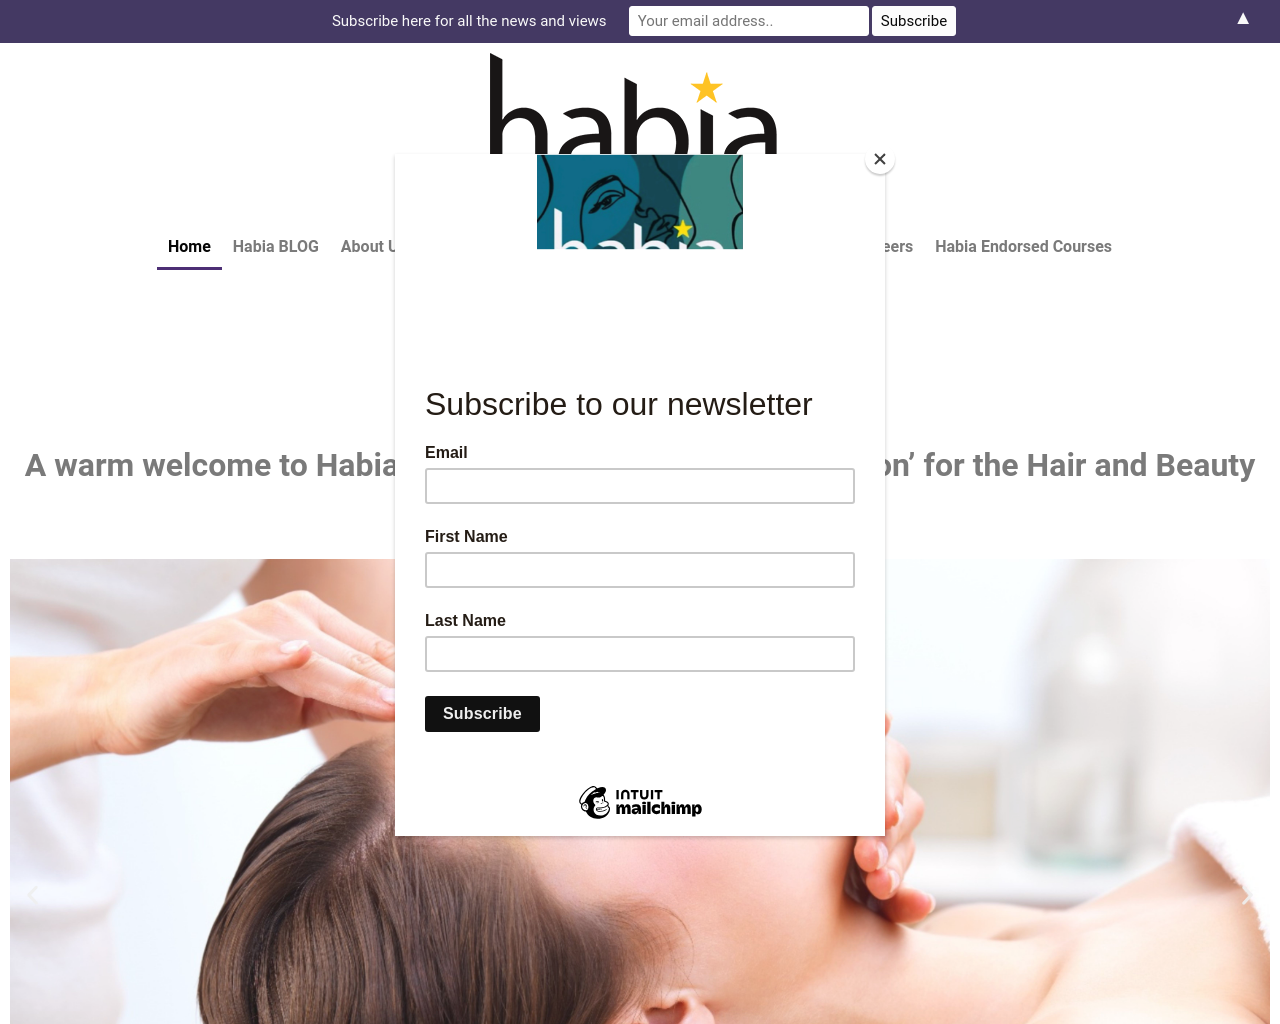 habia.org